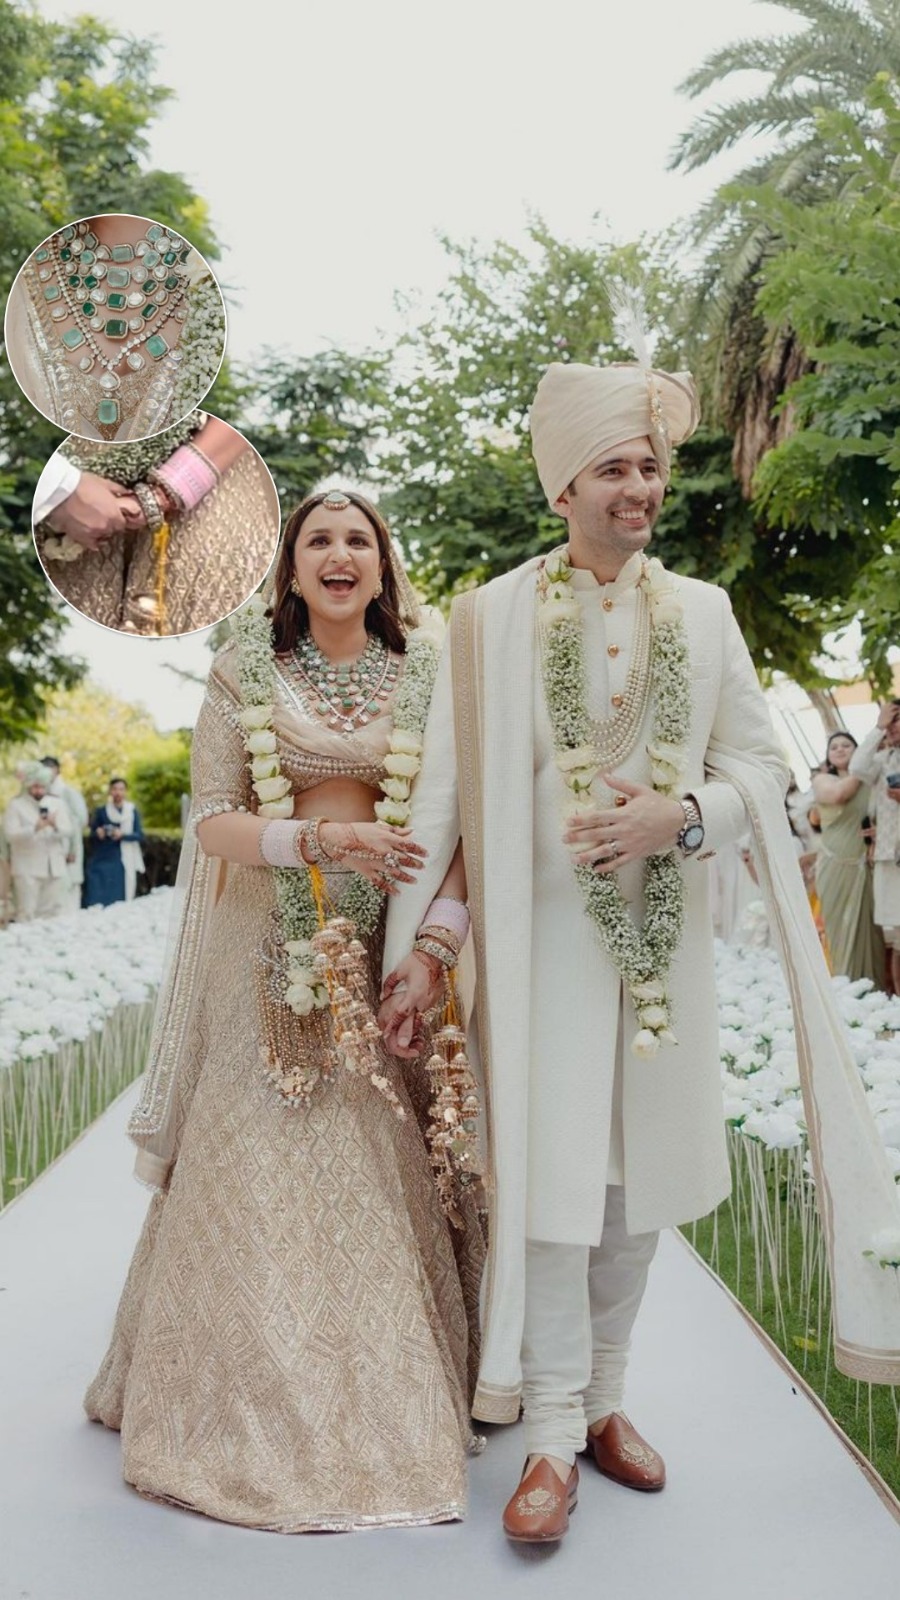 Breaking down Parineeti Chopra's Manish Malhotra bridal wedding look - Bollywood Bubble